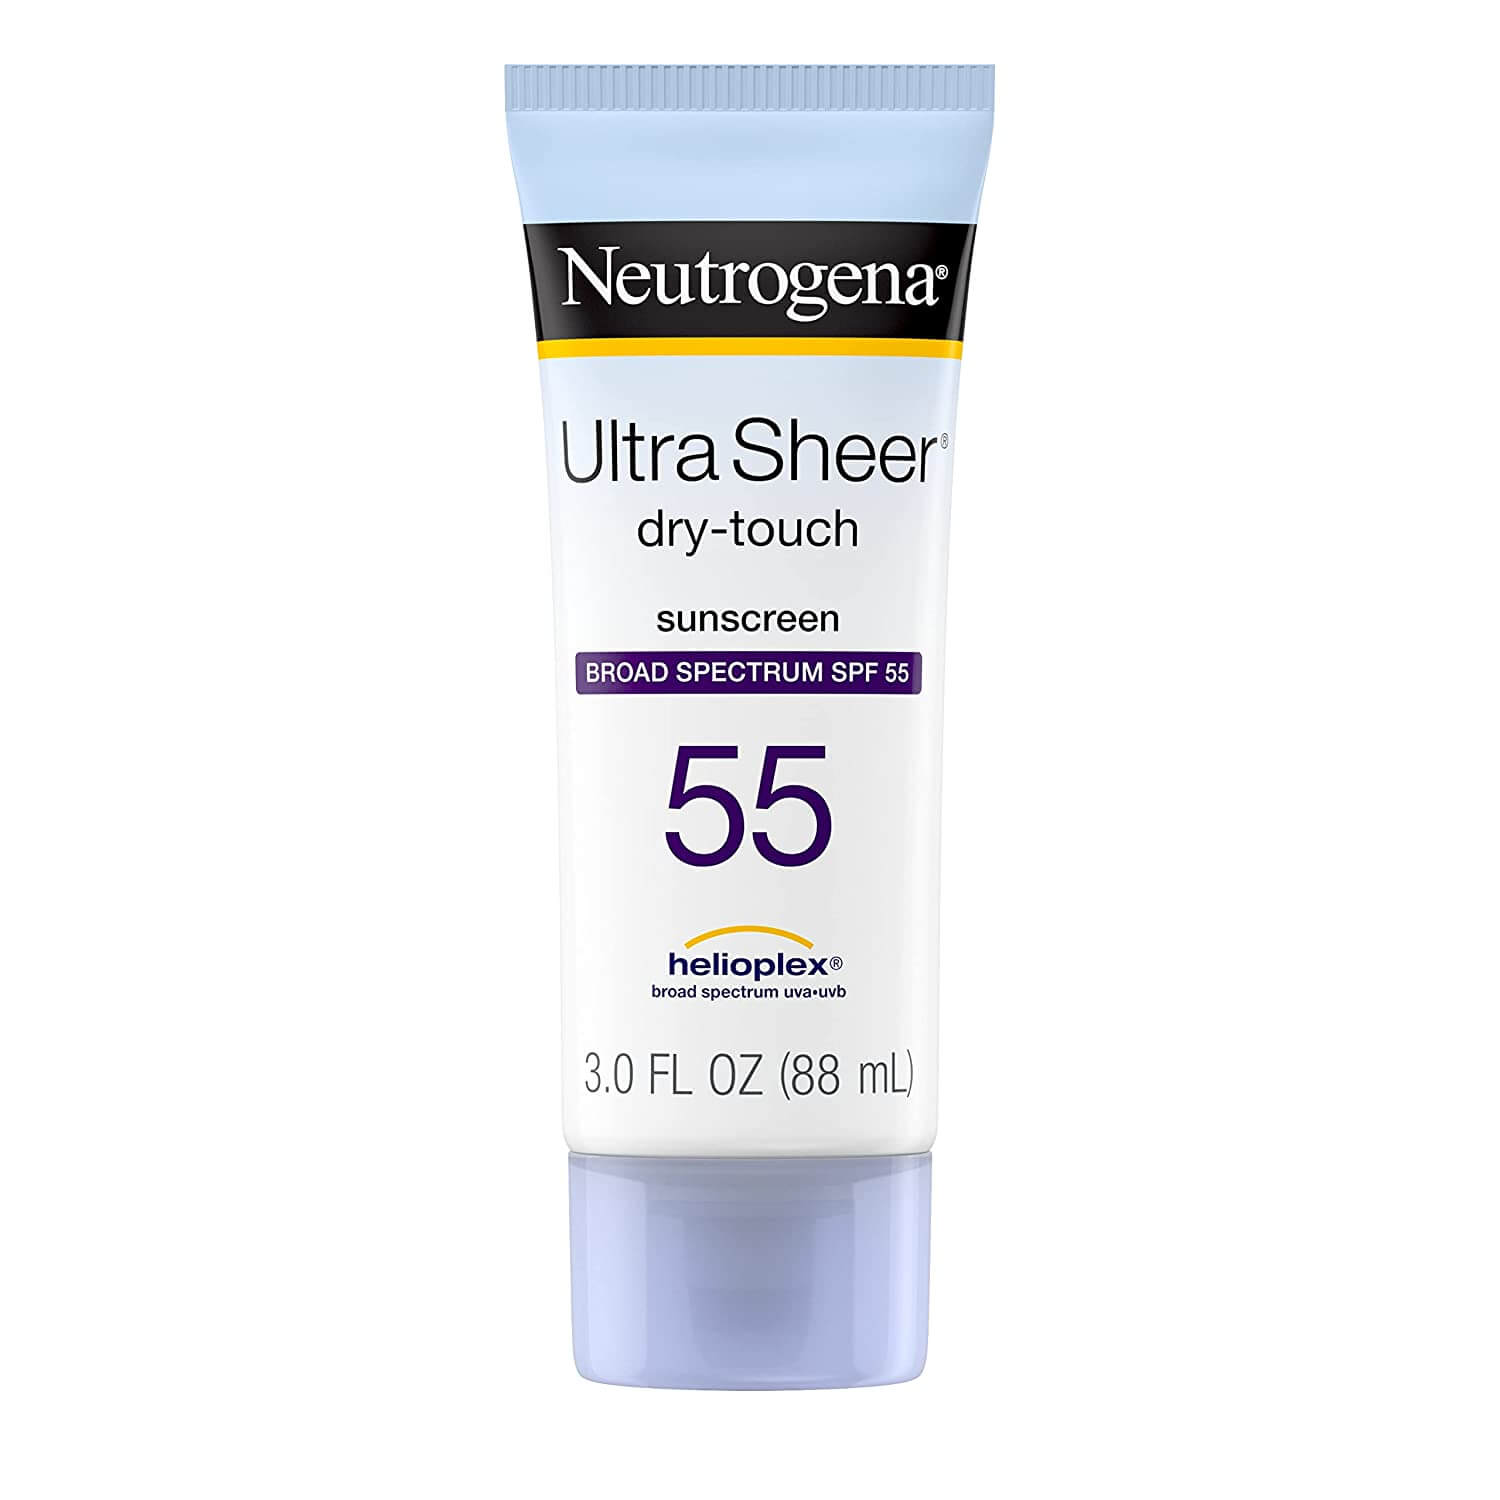 Neutrogena Ultra Sheer Dry-Touch Sunscreen Lotion SPF 55